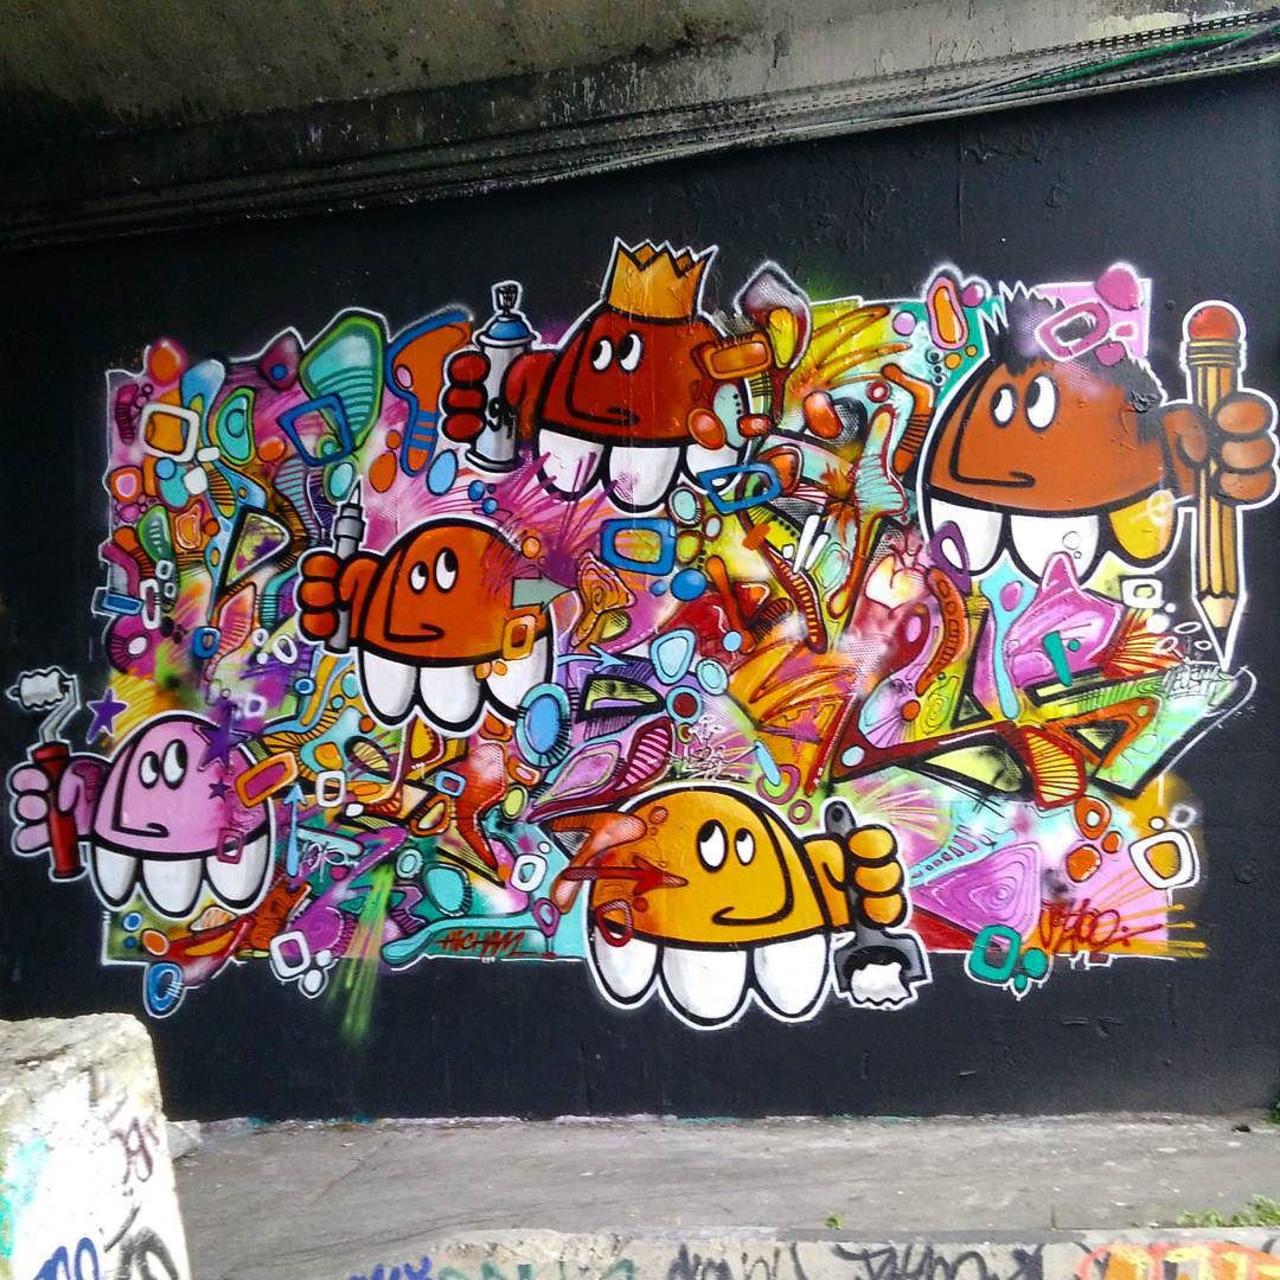 circumjacent_fr: #Paris #graffiti photo by ceky_art http://ift.tt/1RJPI0w #StreetArt http://t.co/byxSHjLzhY